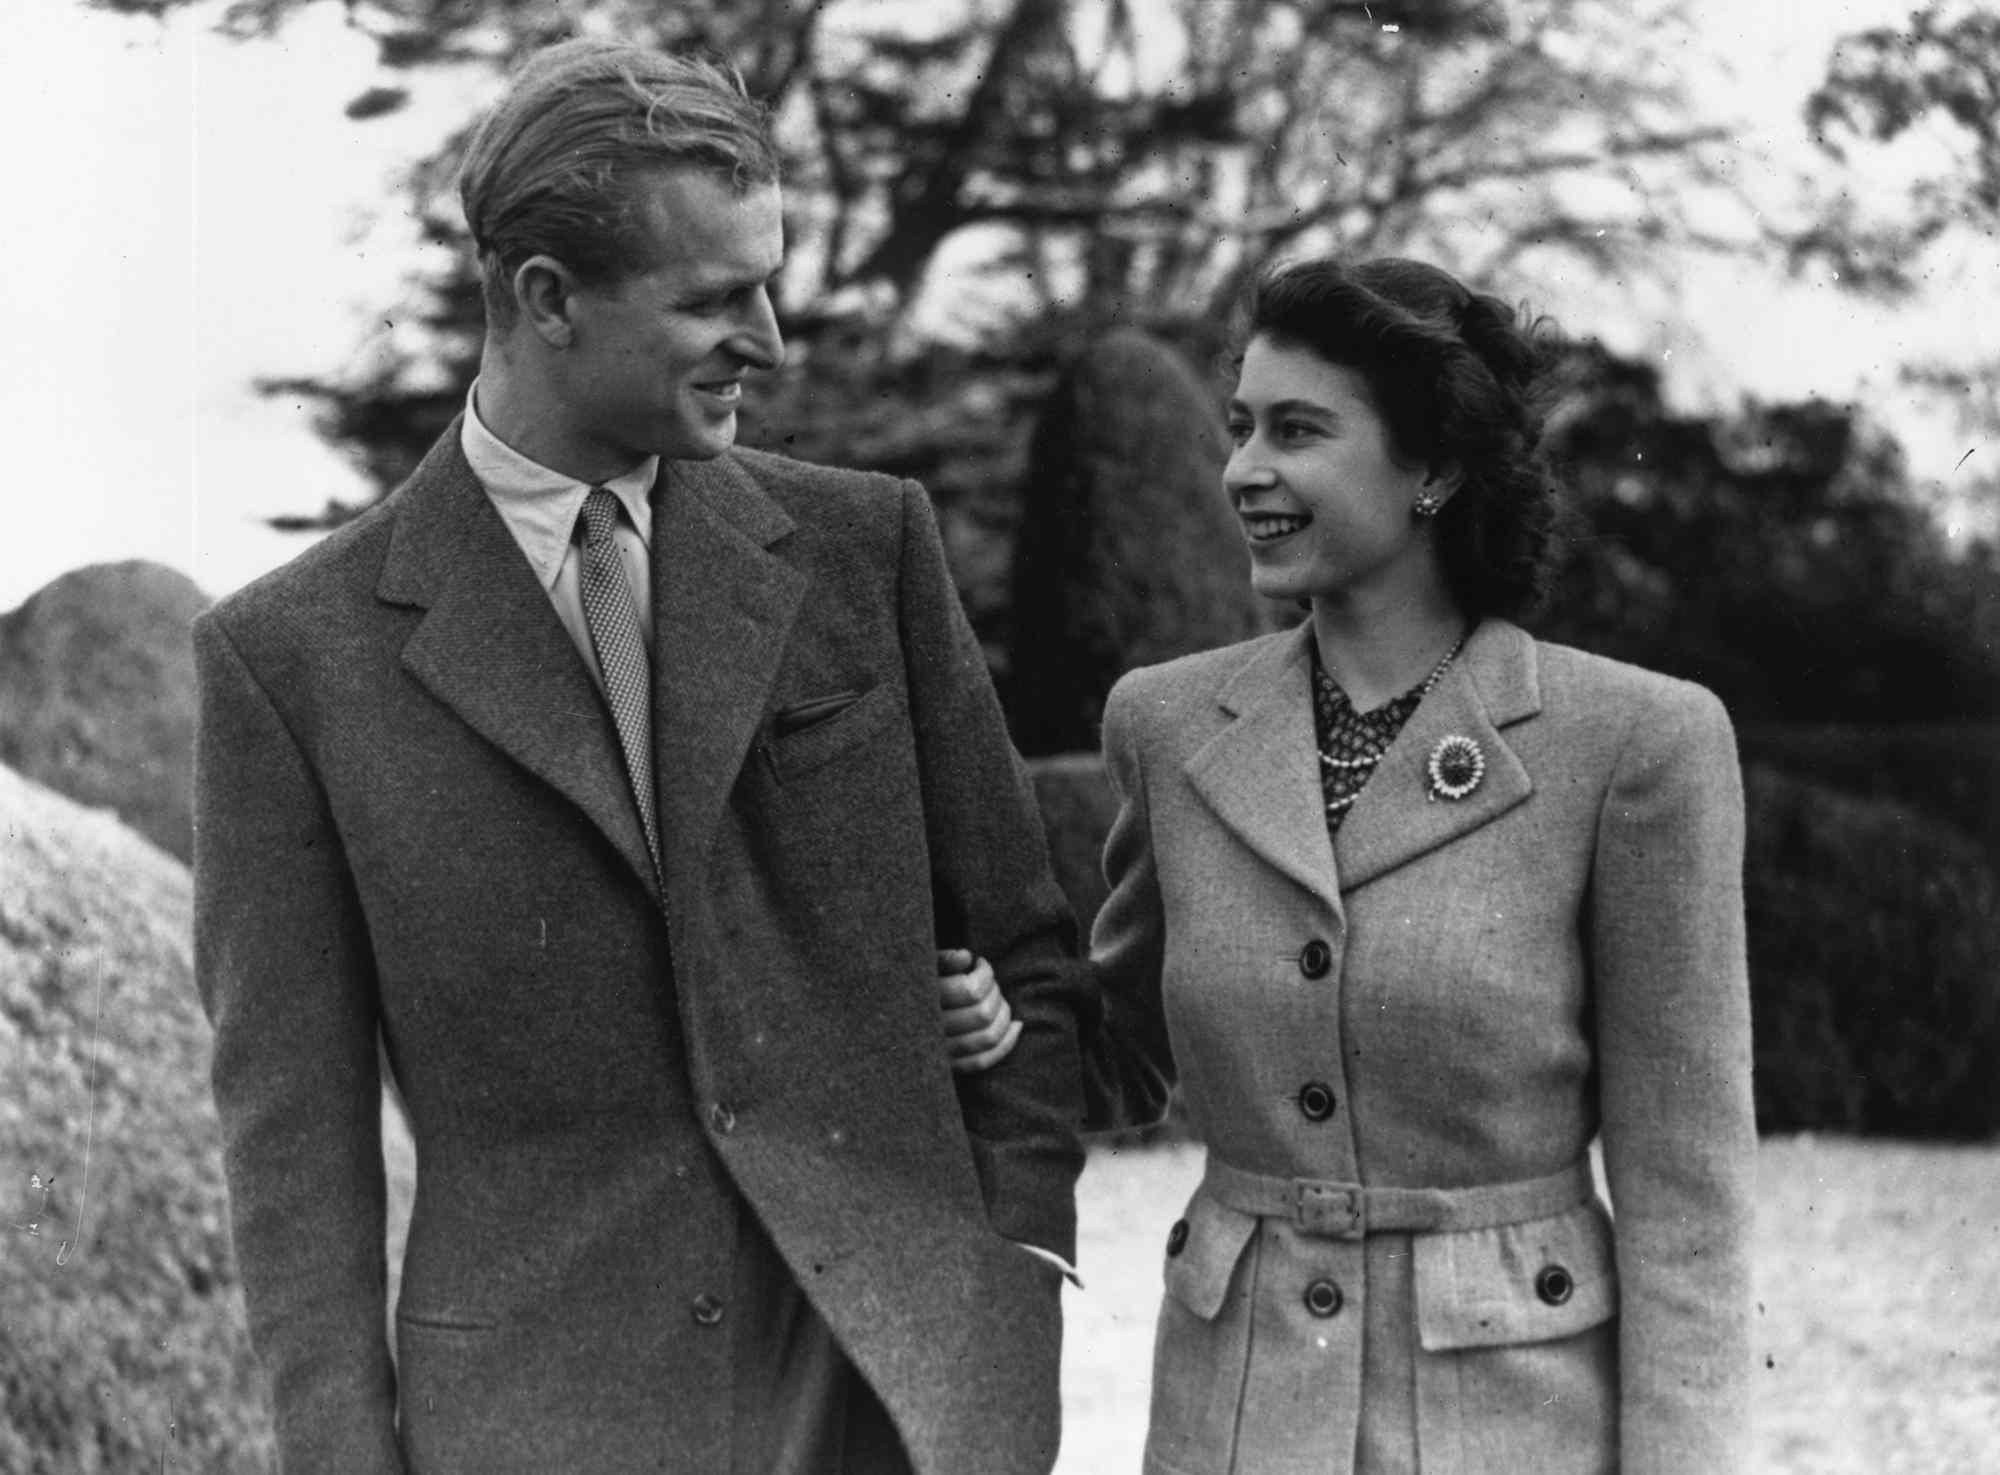 Princess Elizabeth and The Prince Philip, Duke of Edinburgh enjoying a walk during their honeymoon at Broadlands, Romsey, Hampshire